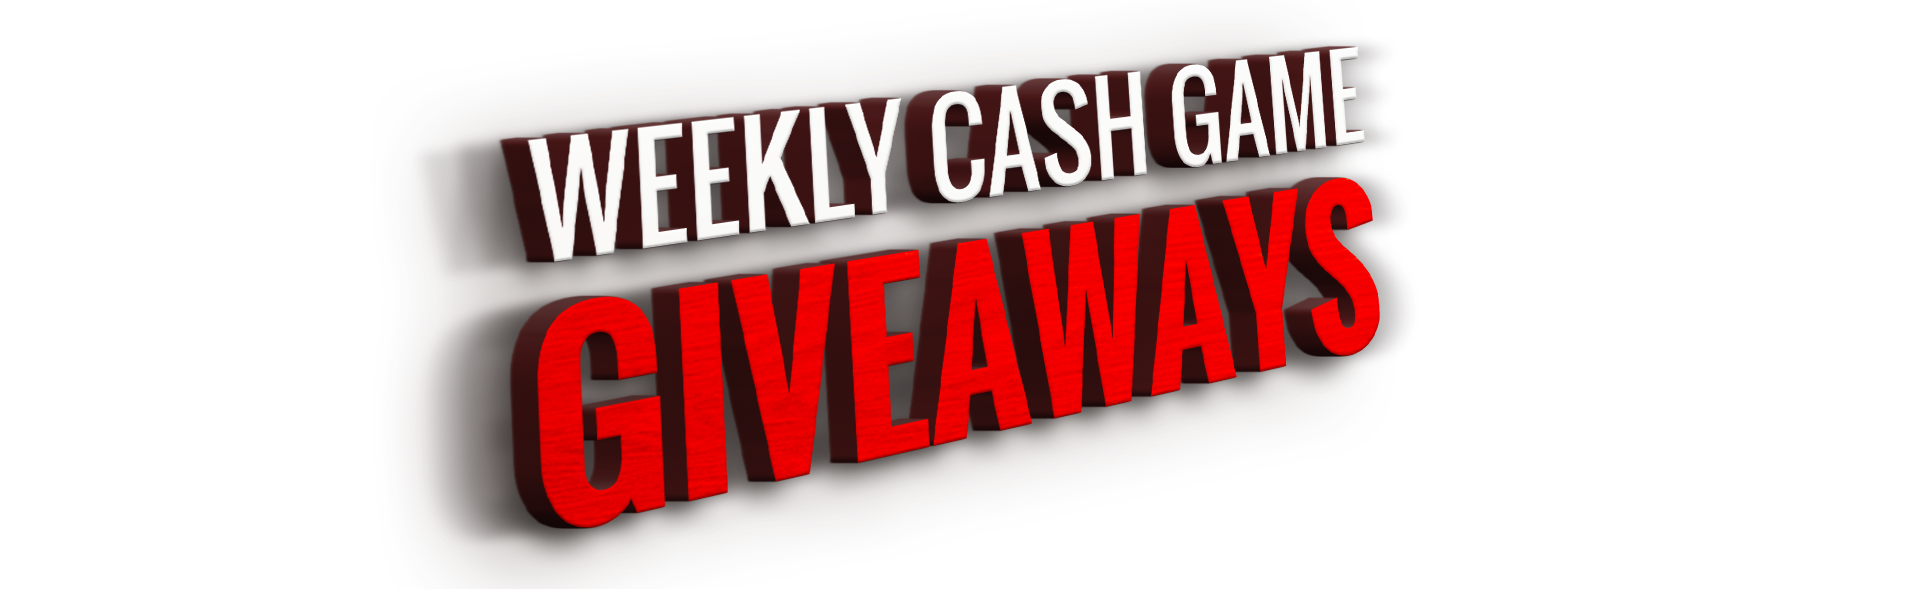 Weekly cash game giveaways